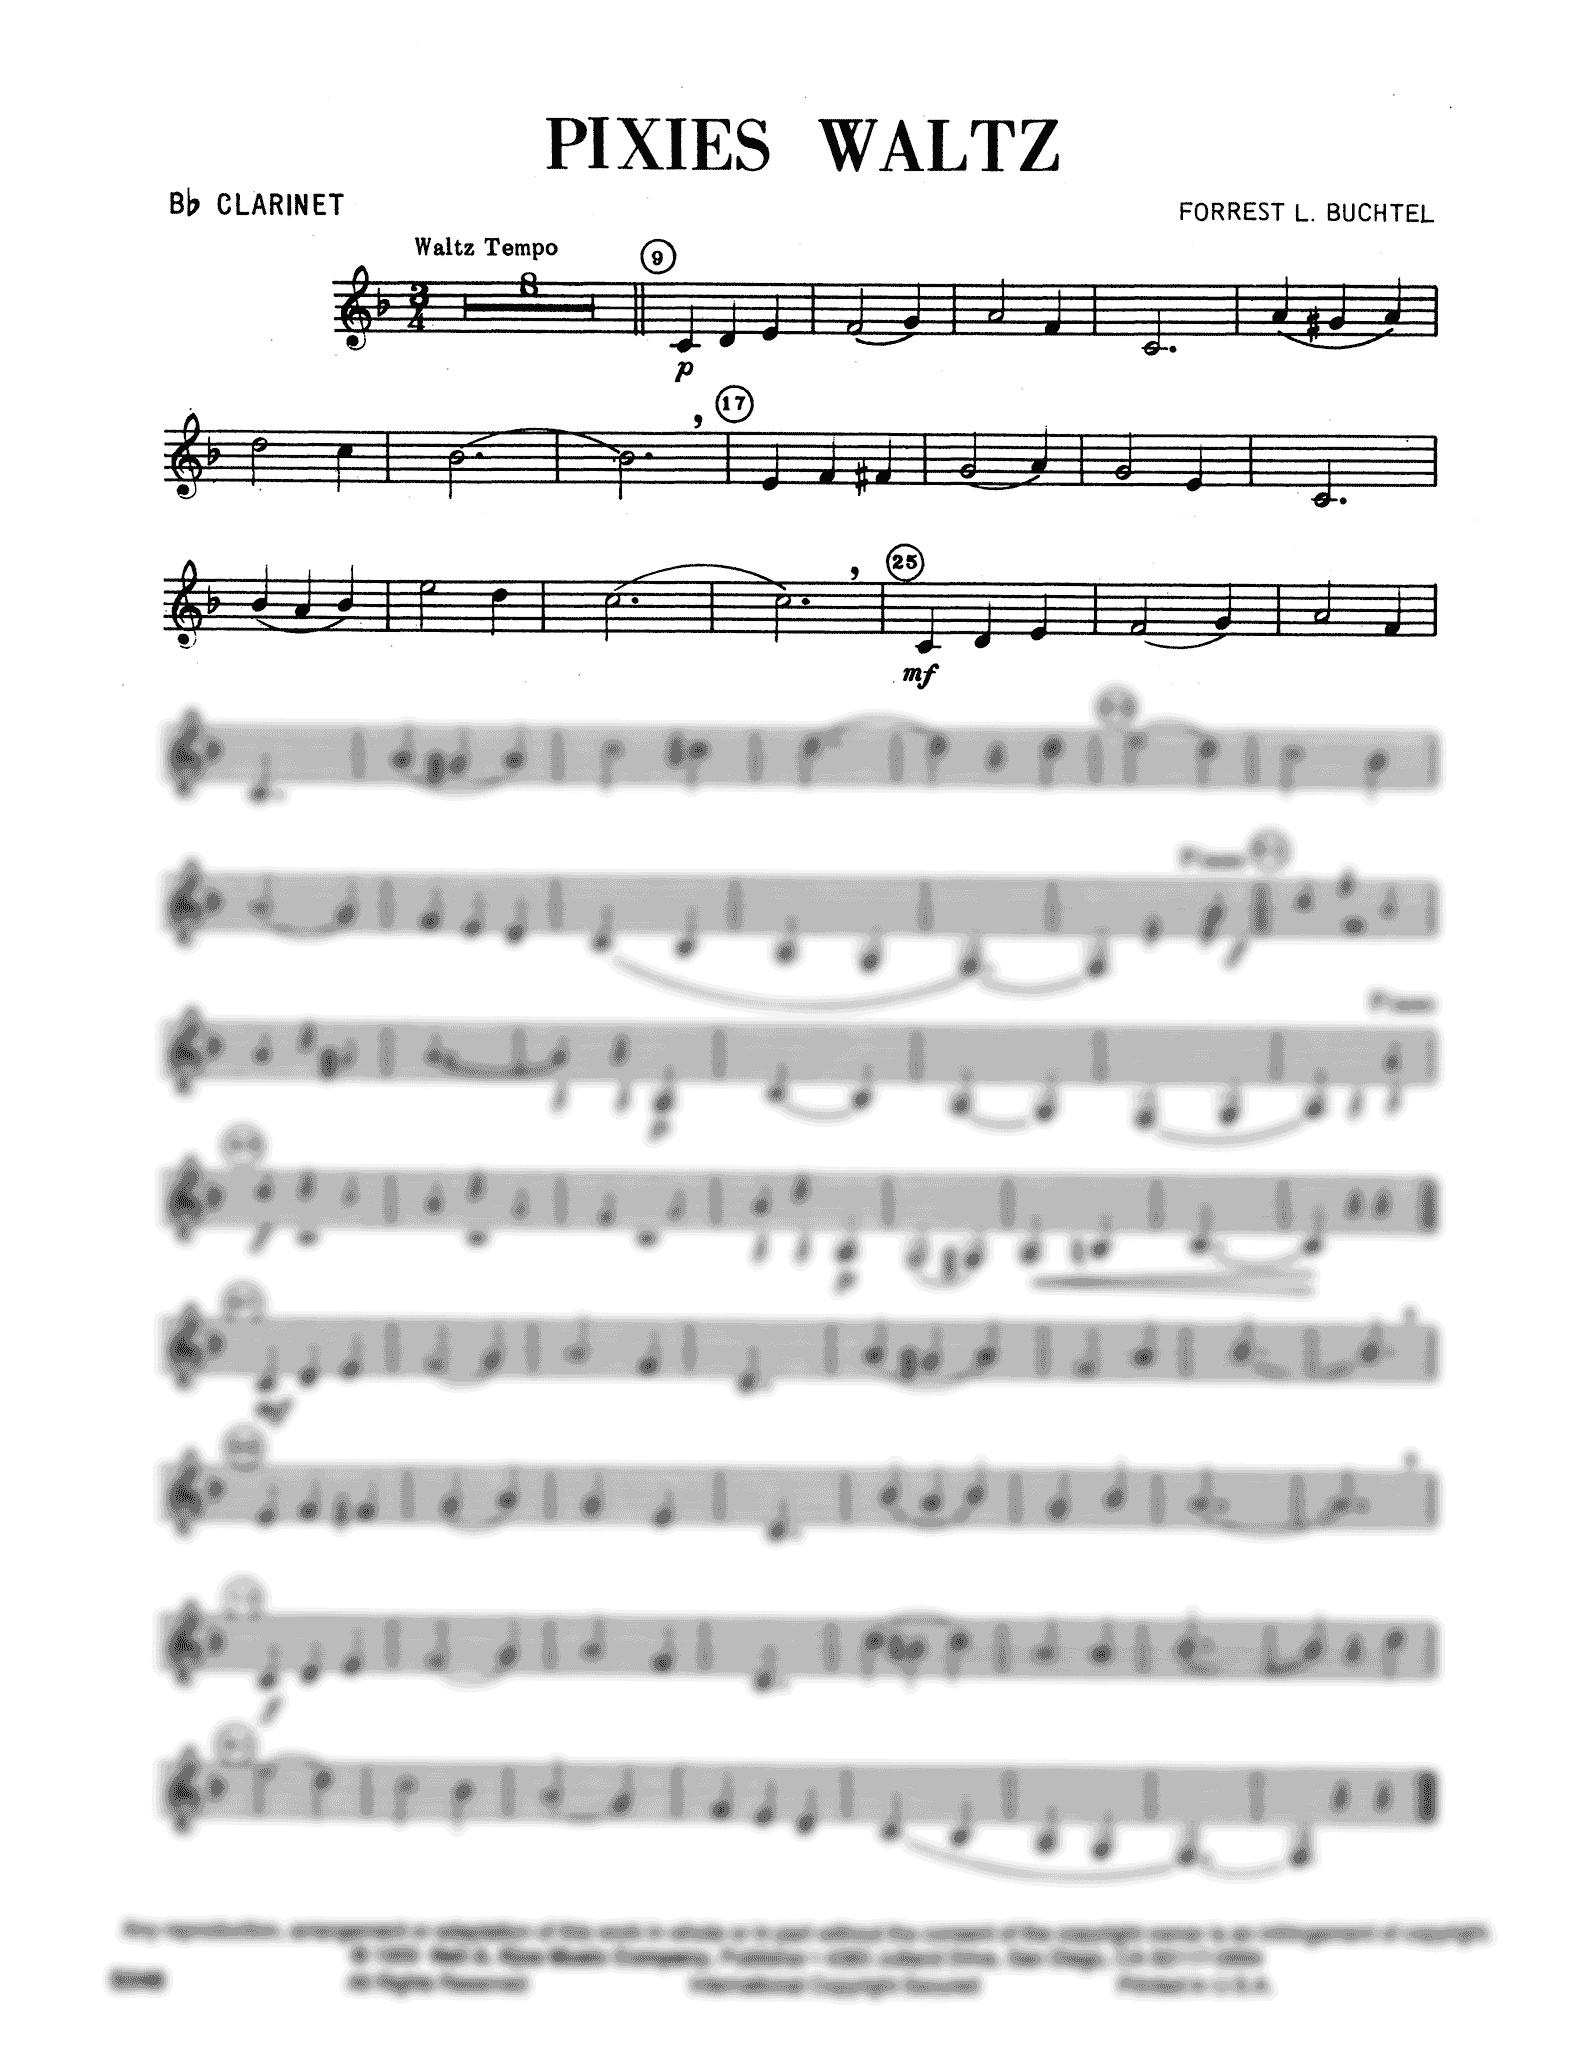 Buchtel Pixies Waltz clarinet part